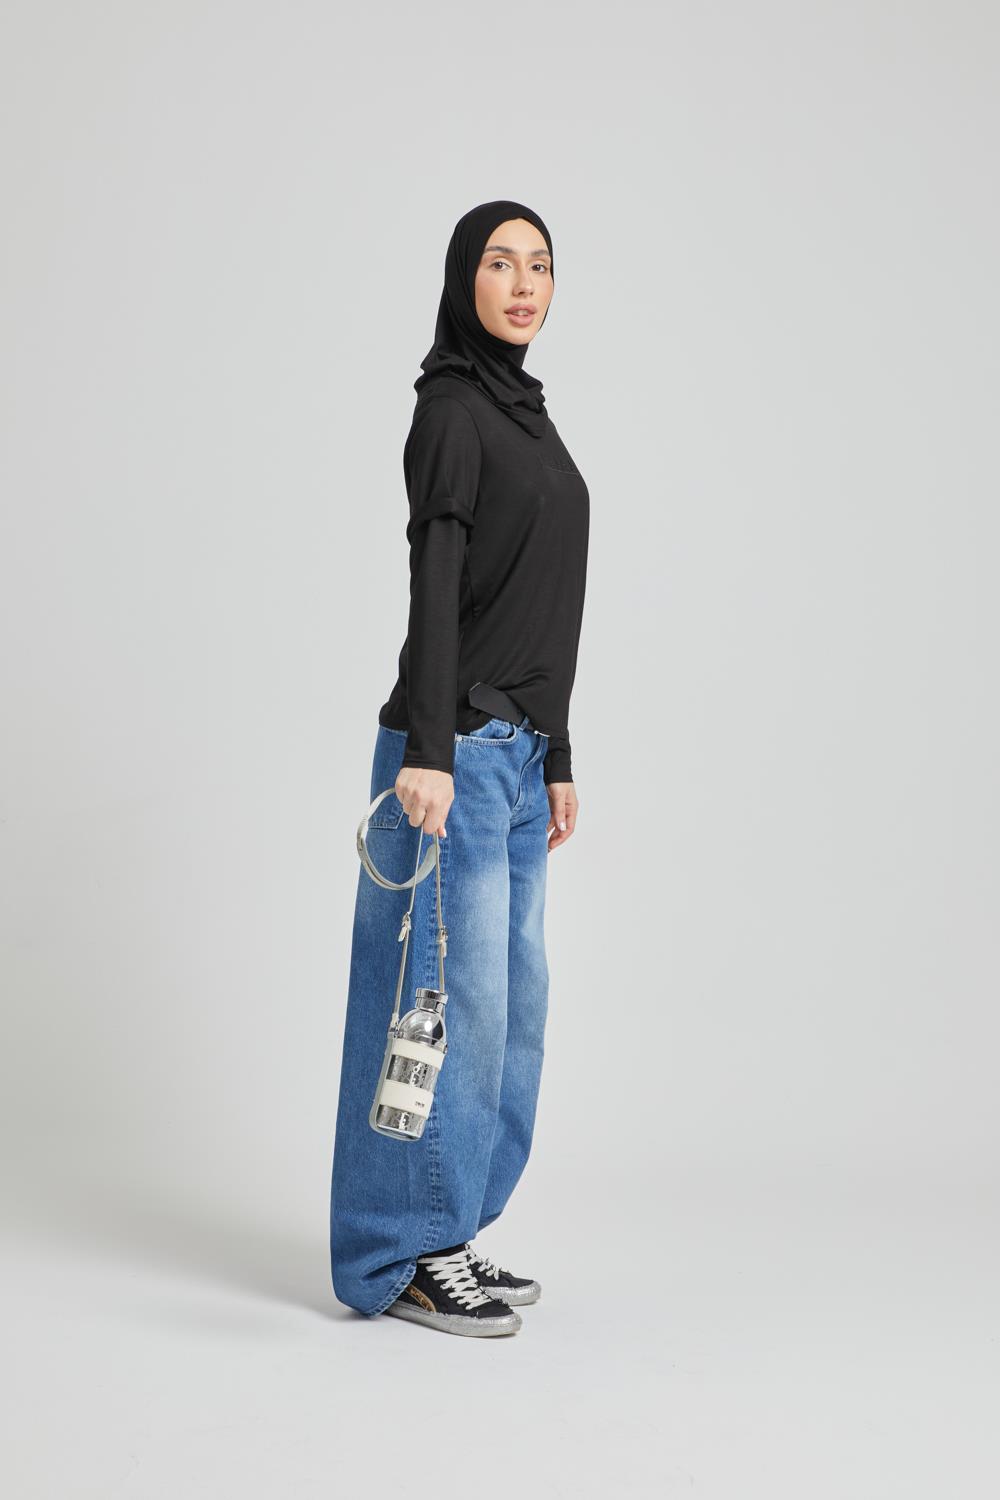 Sahara Women's Black Long Sleeve Tshirt